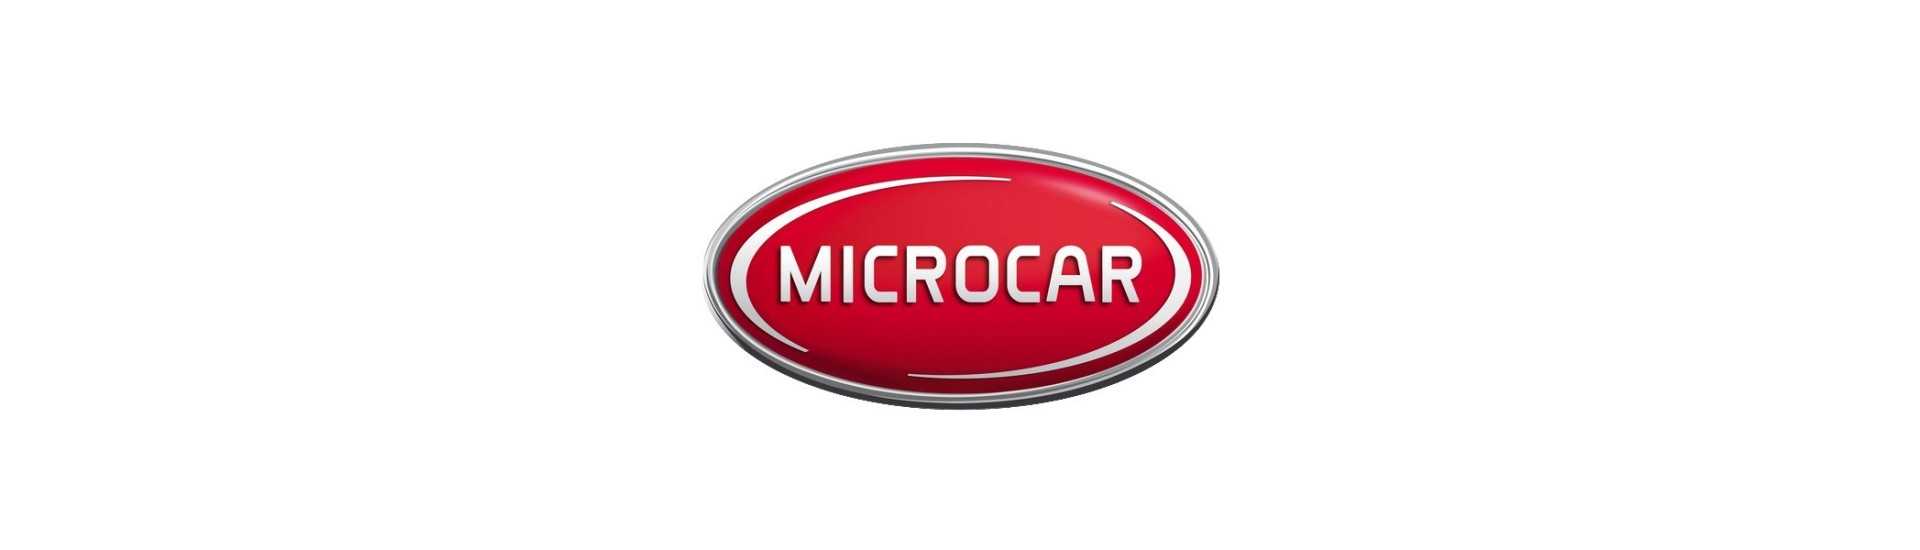 Paras auton hinta ilman lupaa Microcar